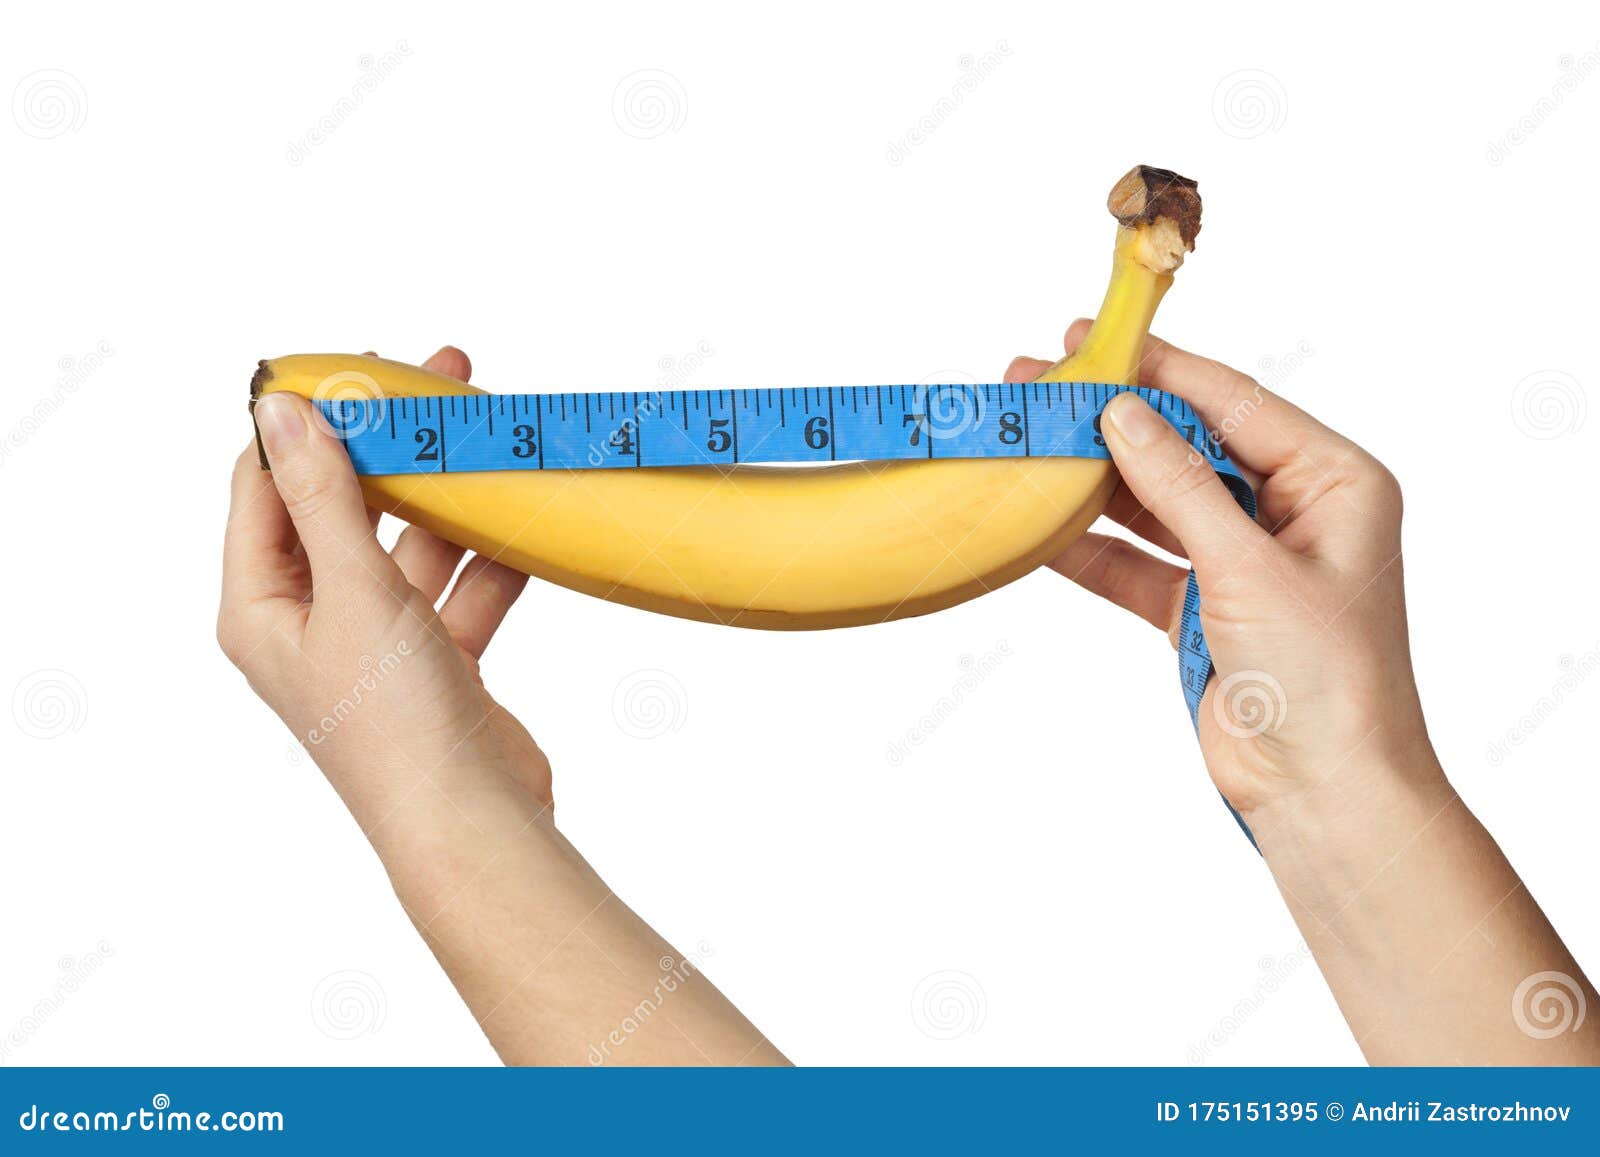 Länge messen penis Penisgröße: Was